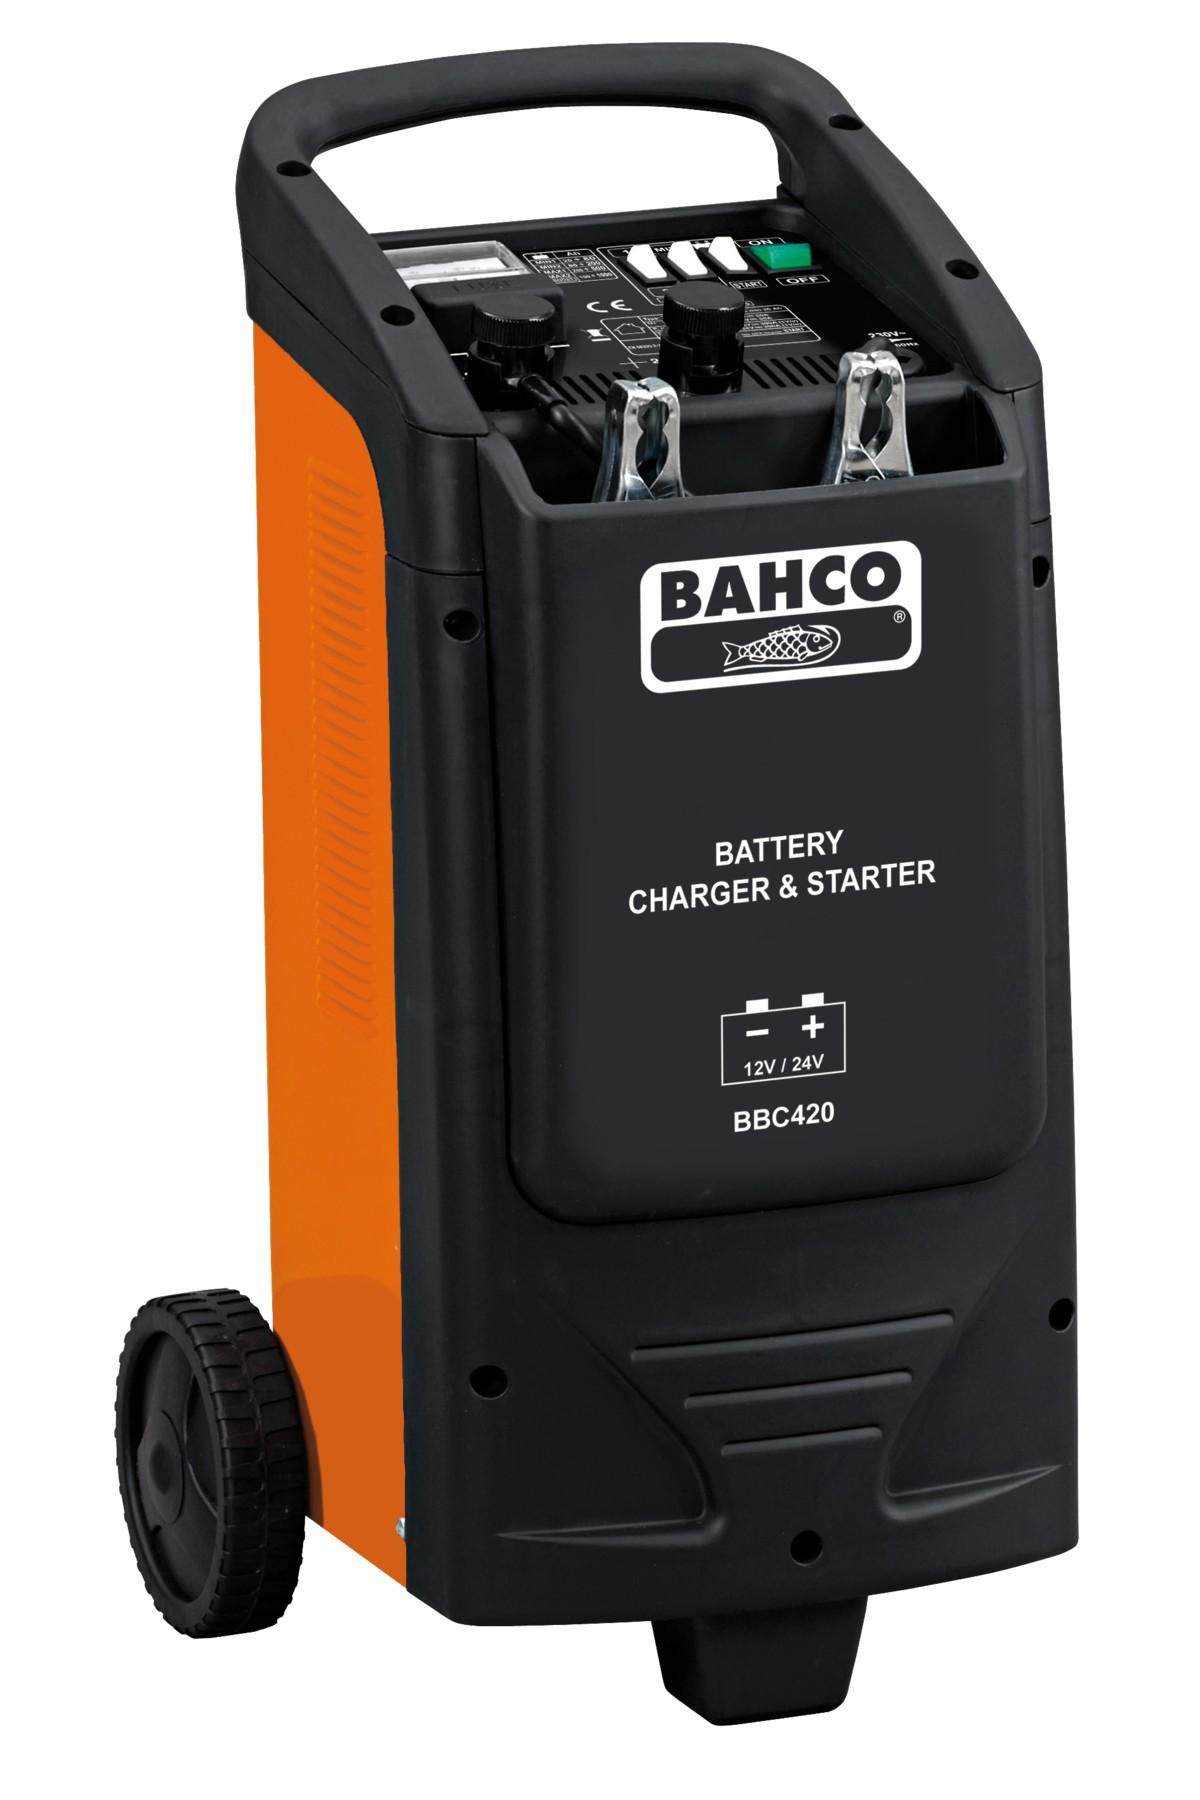 Battery charging and starting 12v/24v 400A